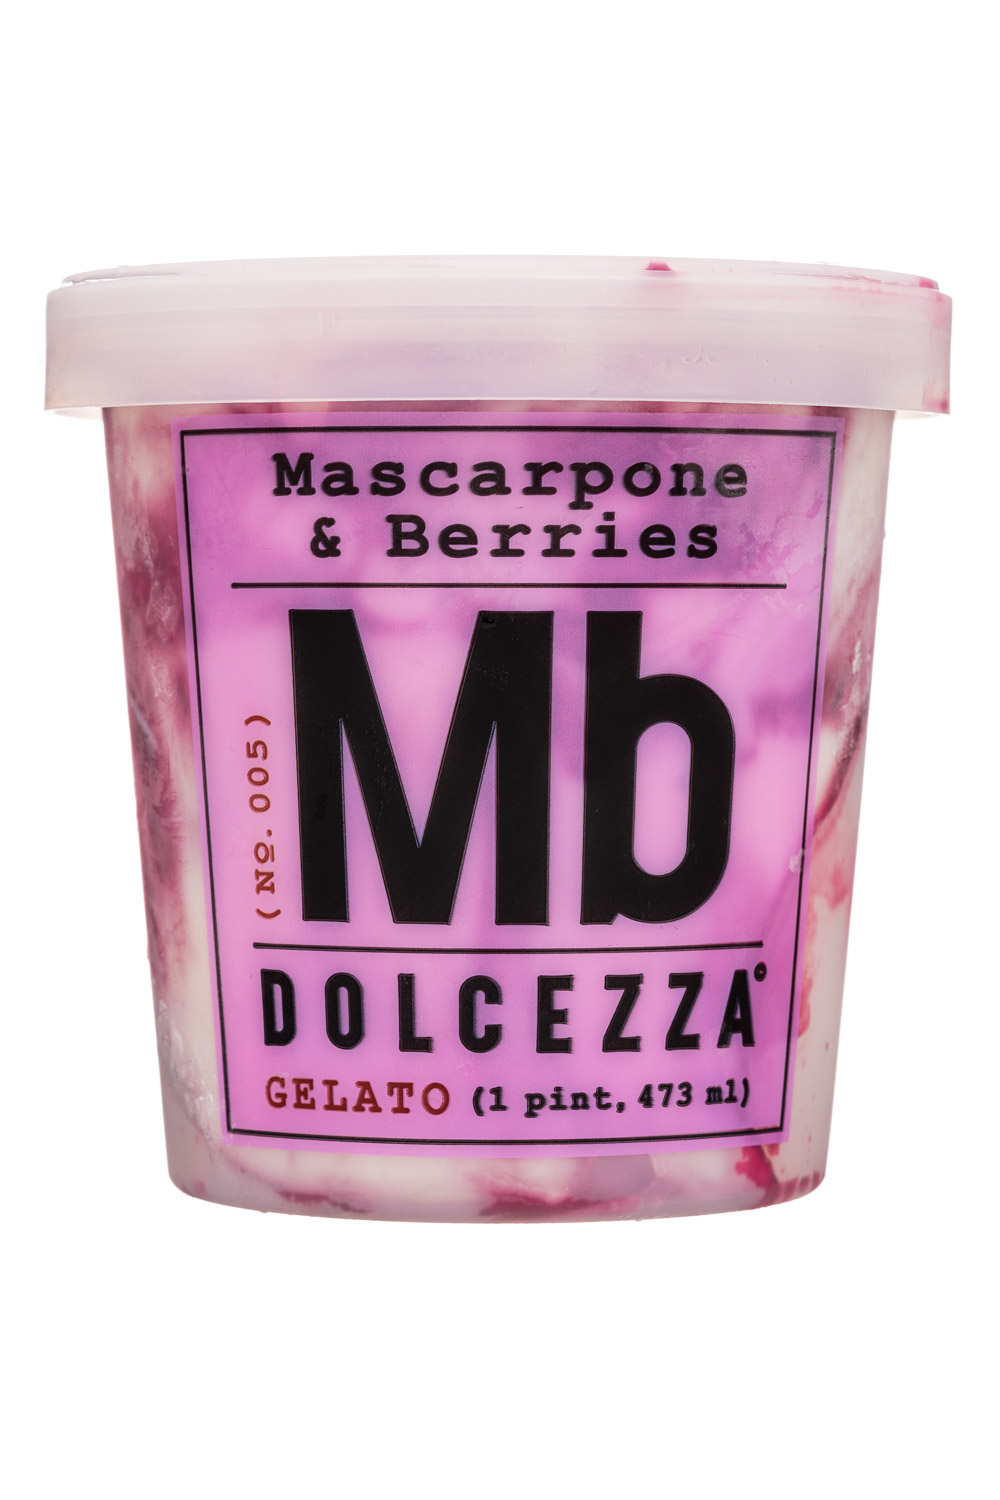 Mascarpone & Berries